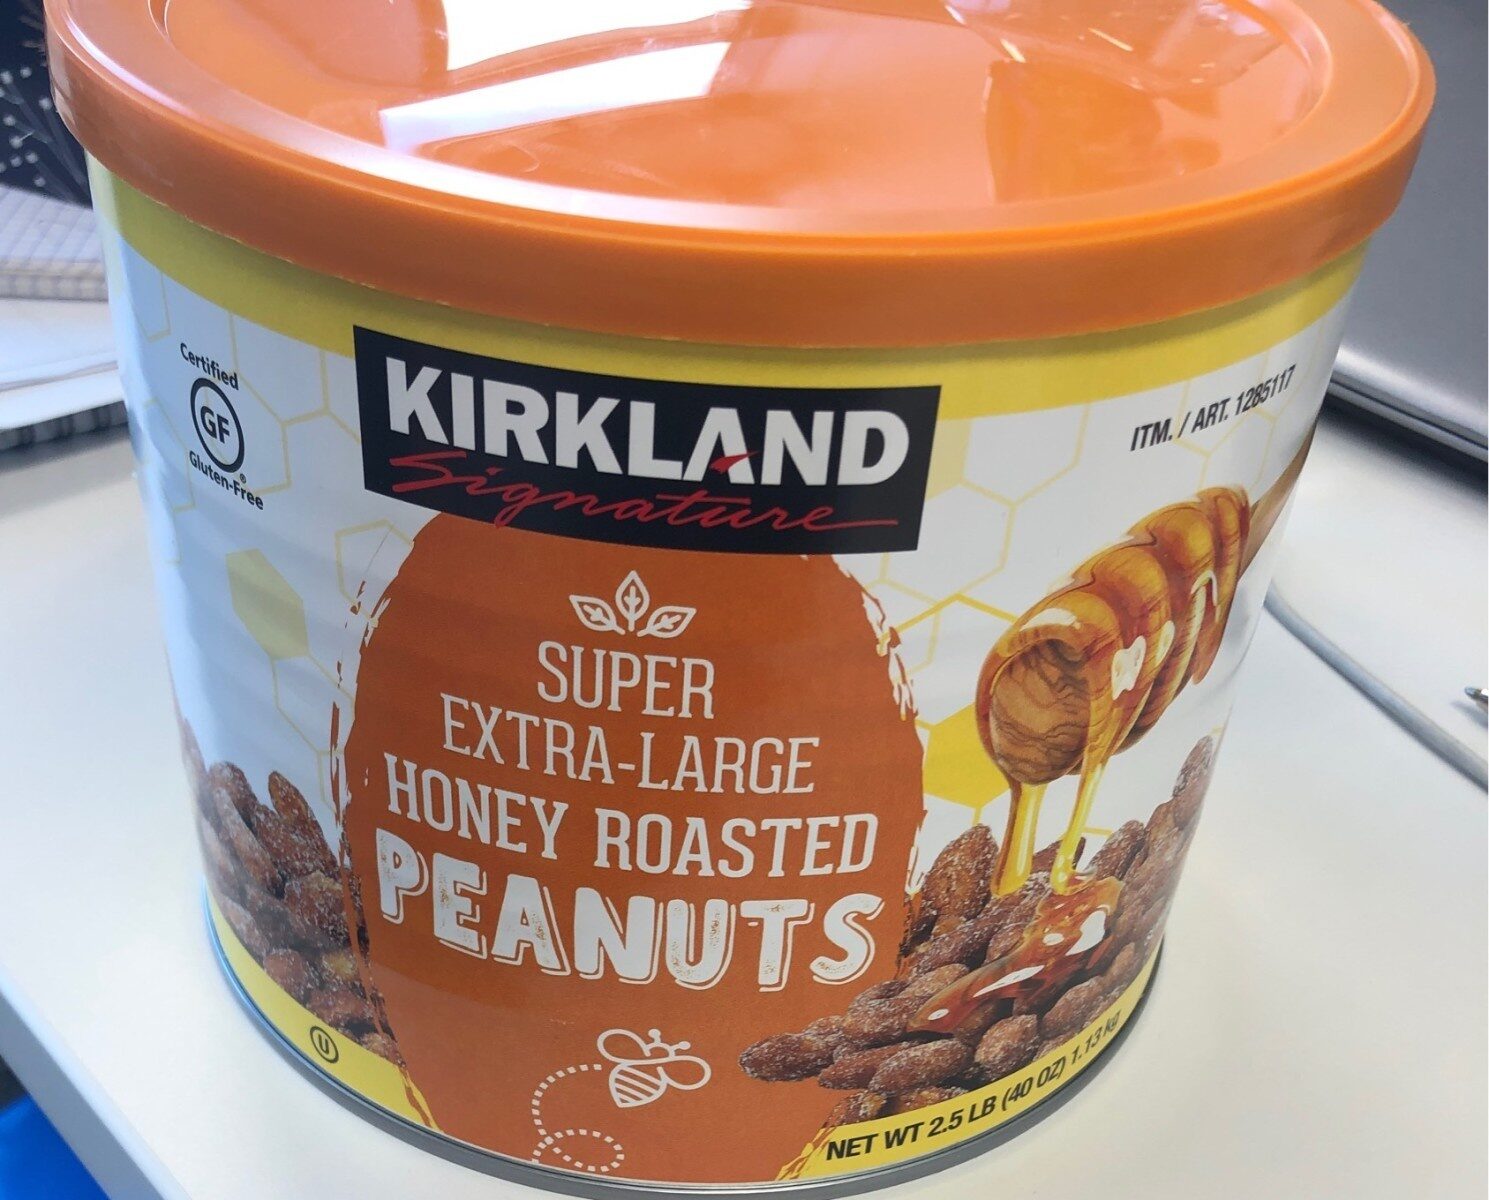 Super Extra-Large Honey Roasted Peanuts - Product